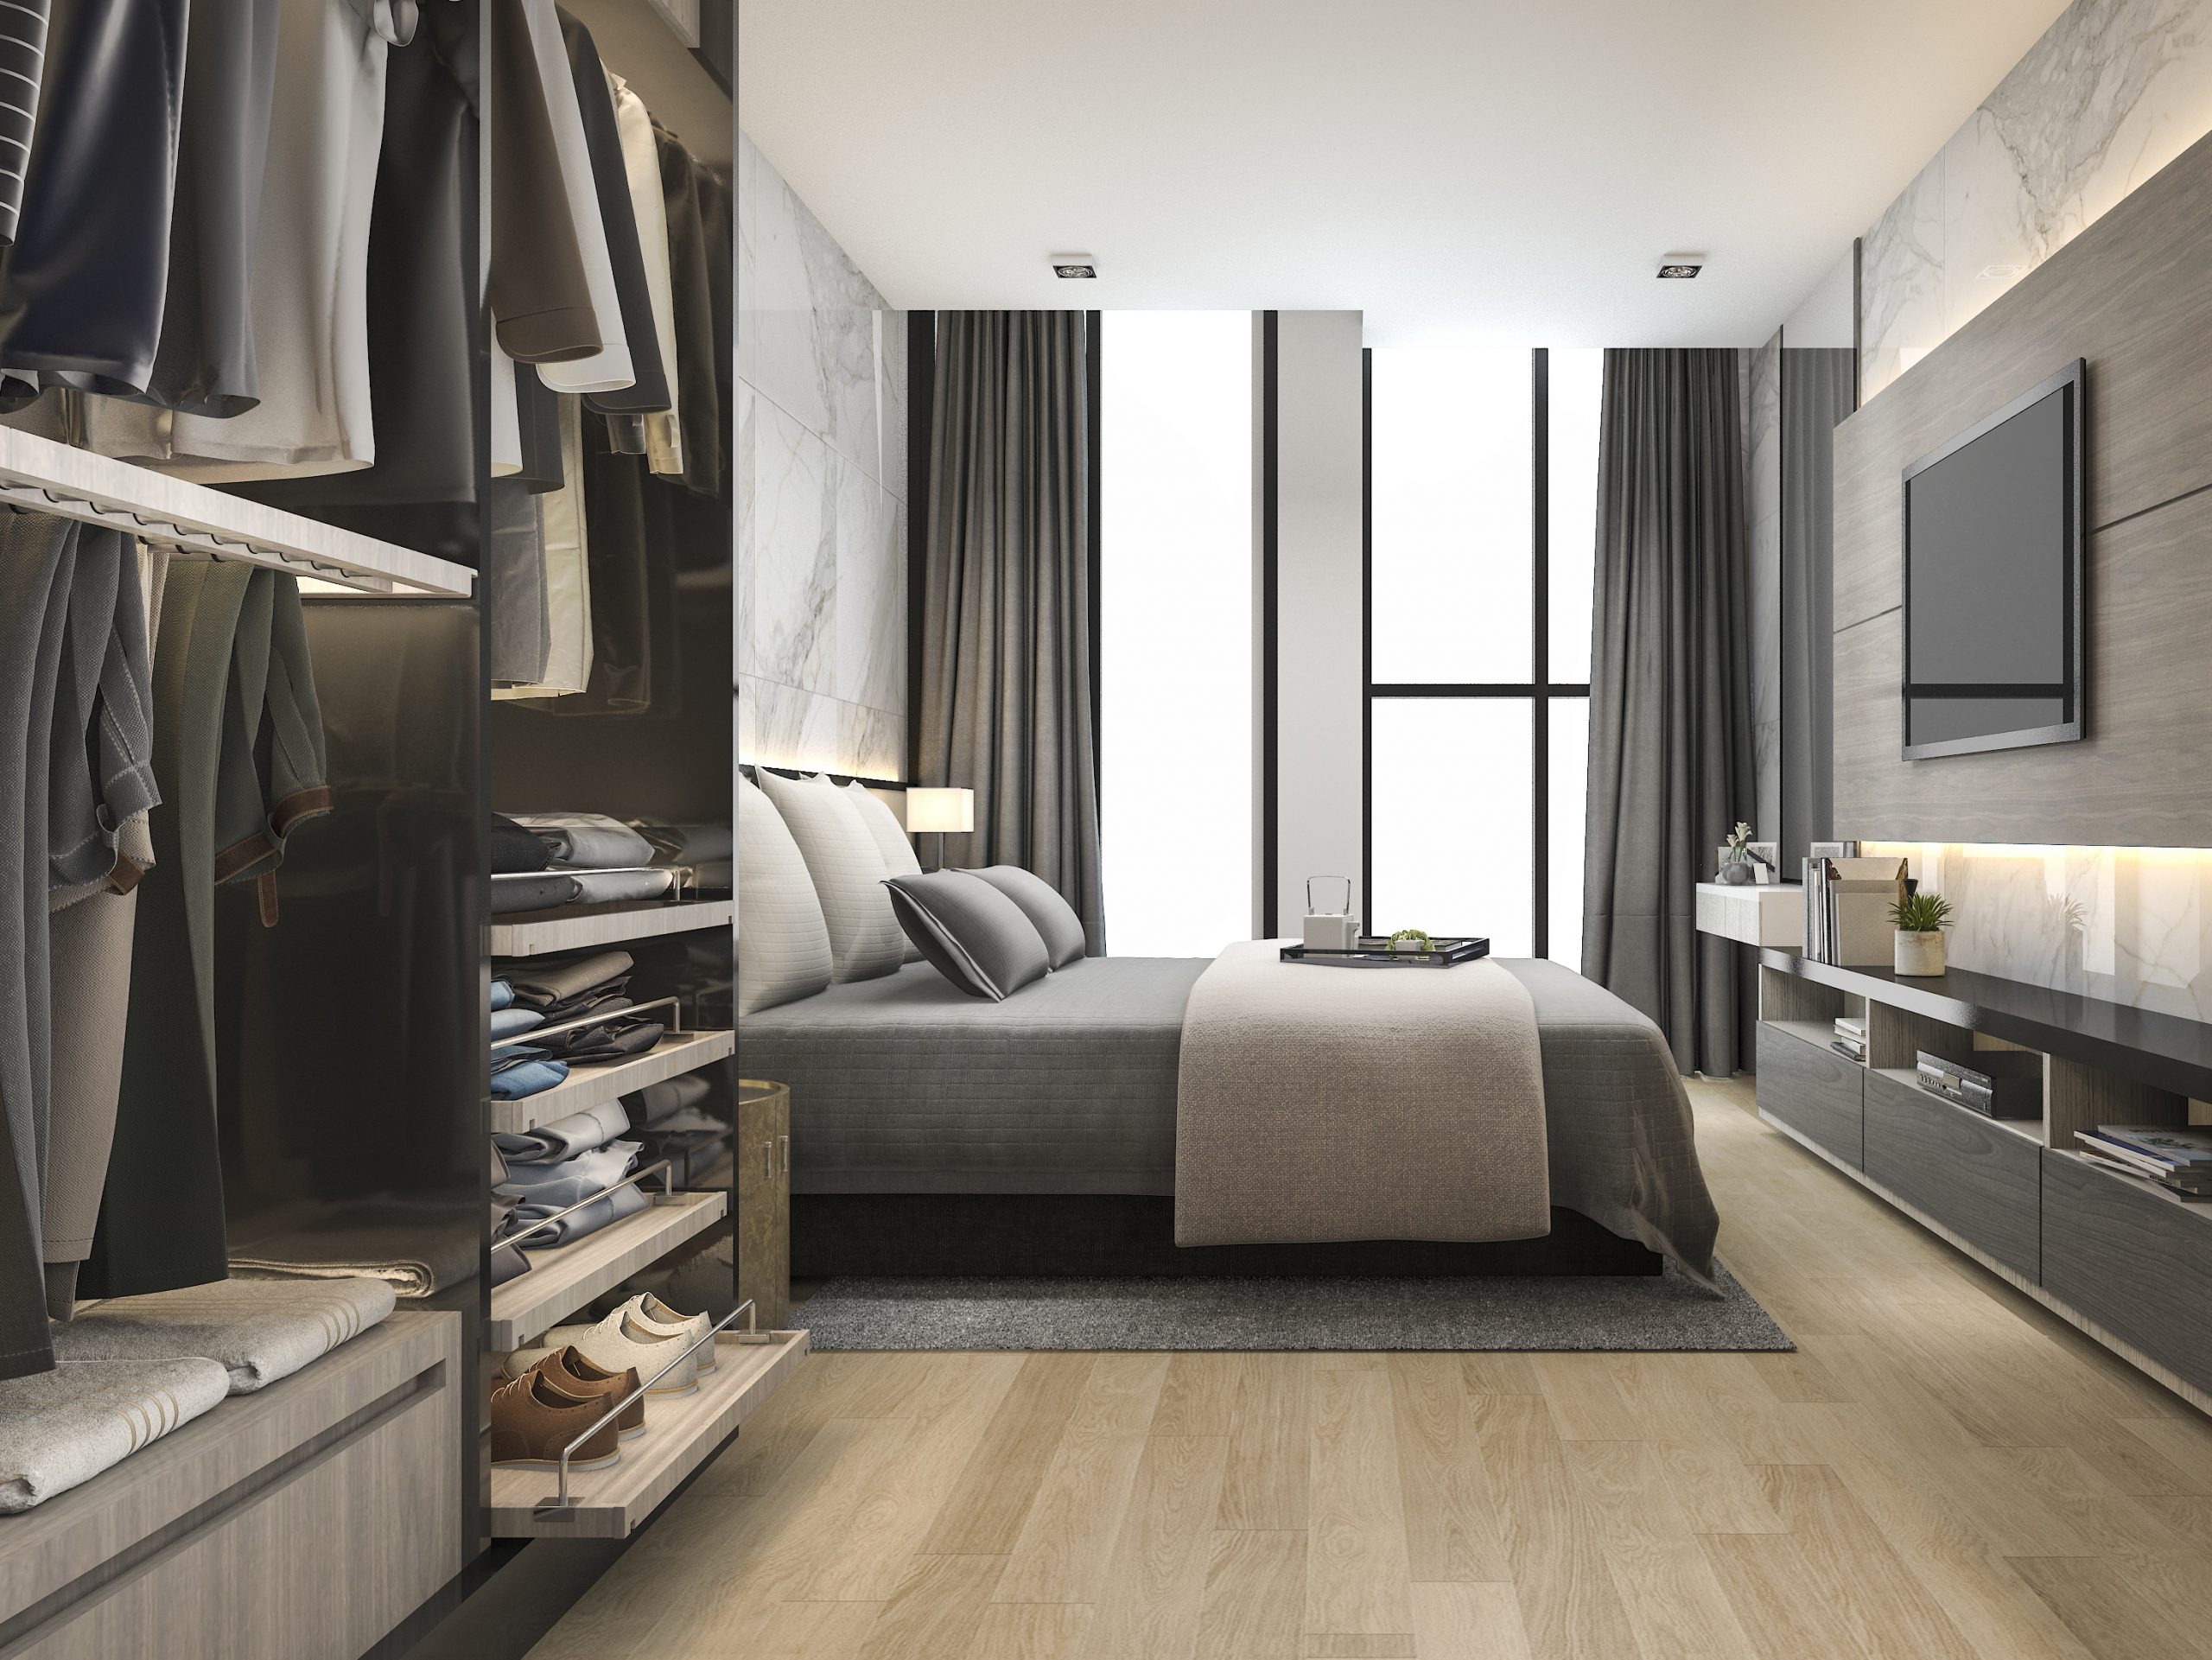 Bedroom with closet – design ideas